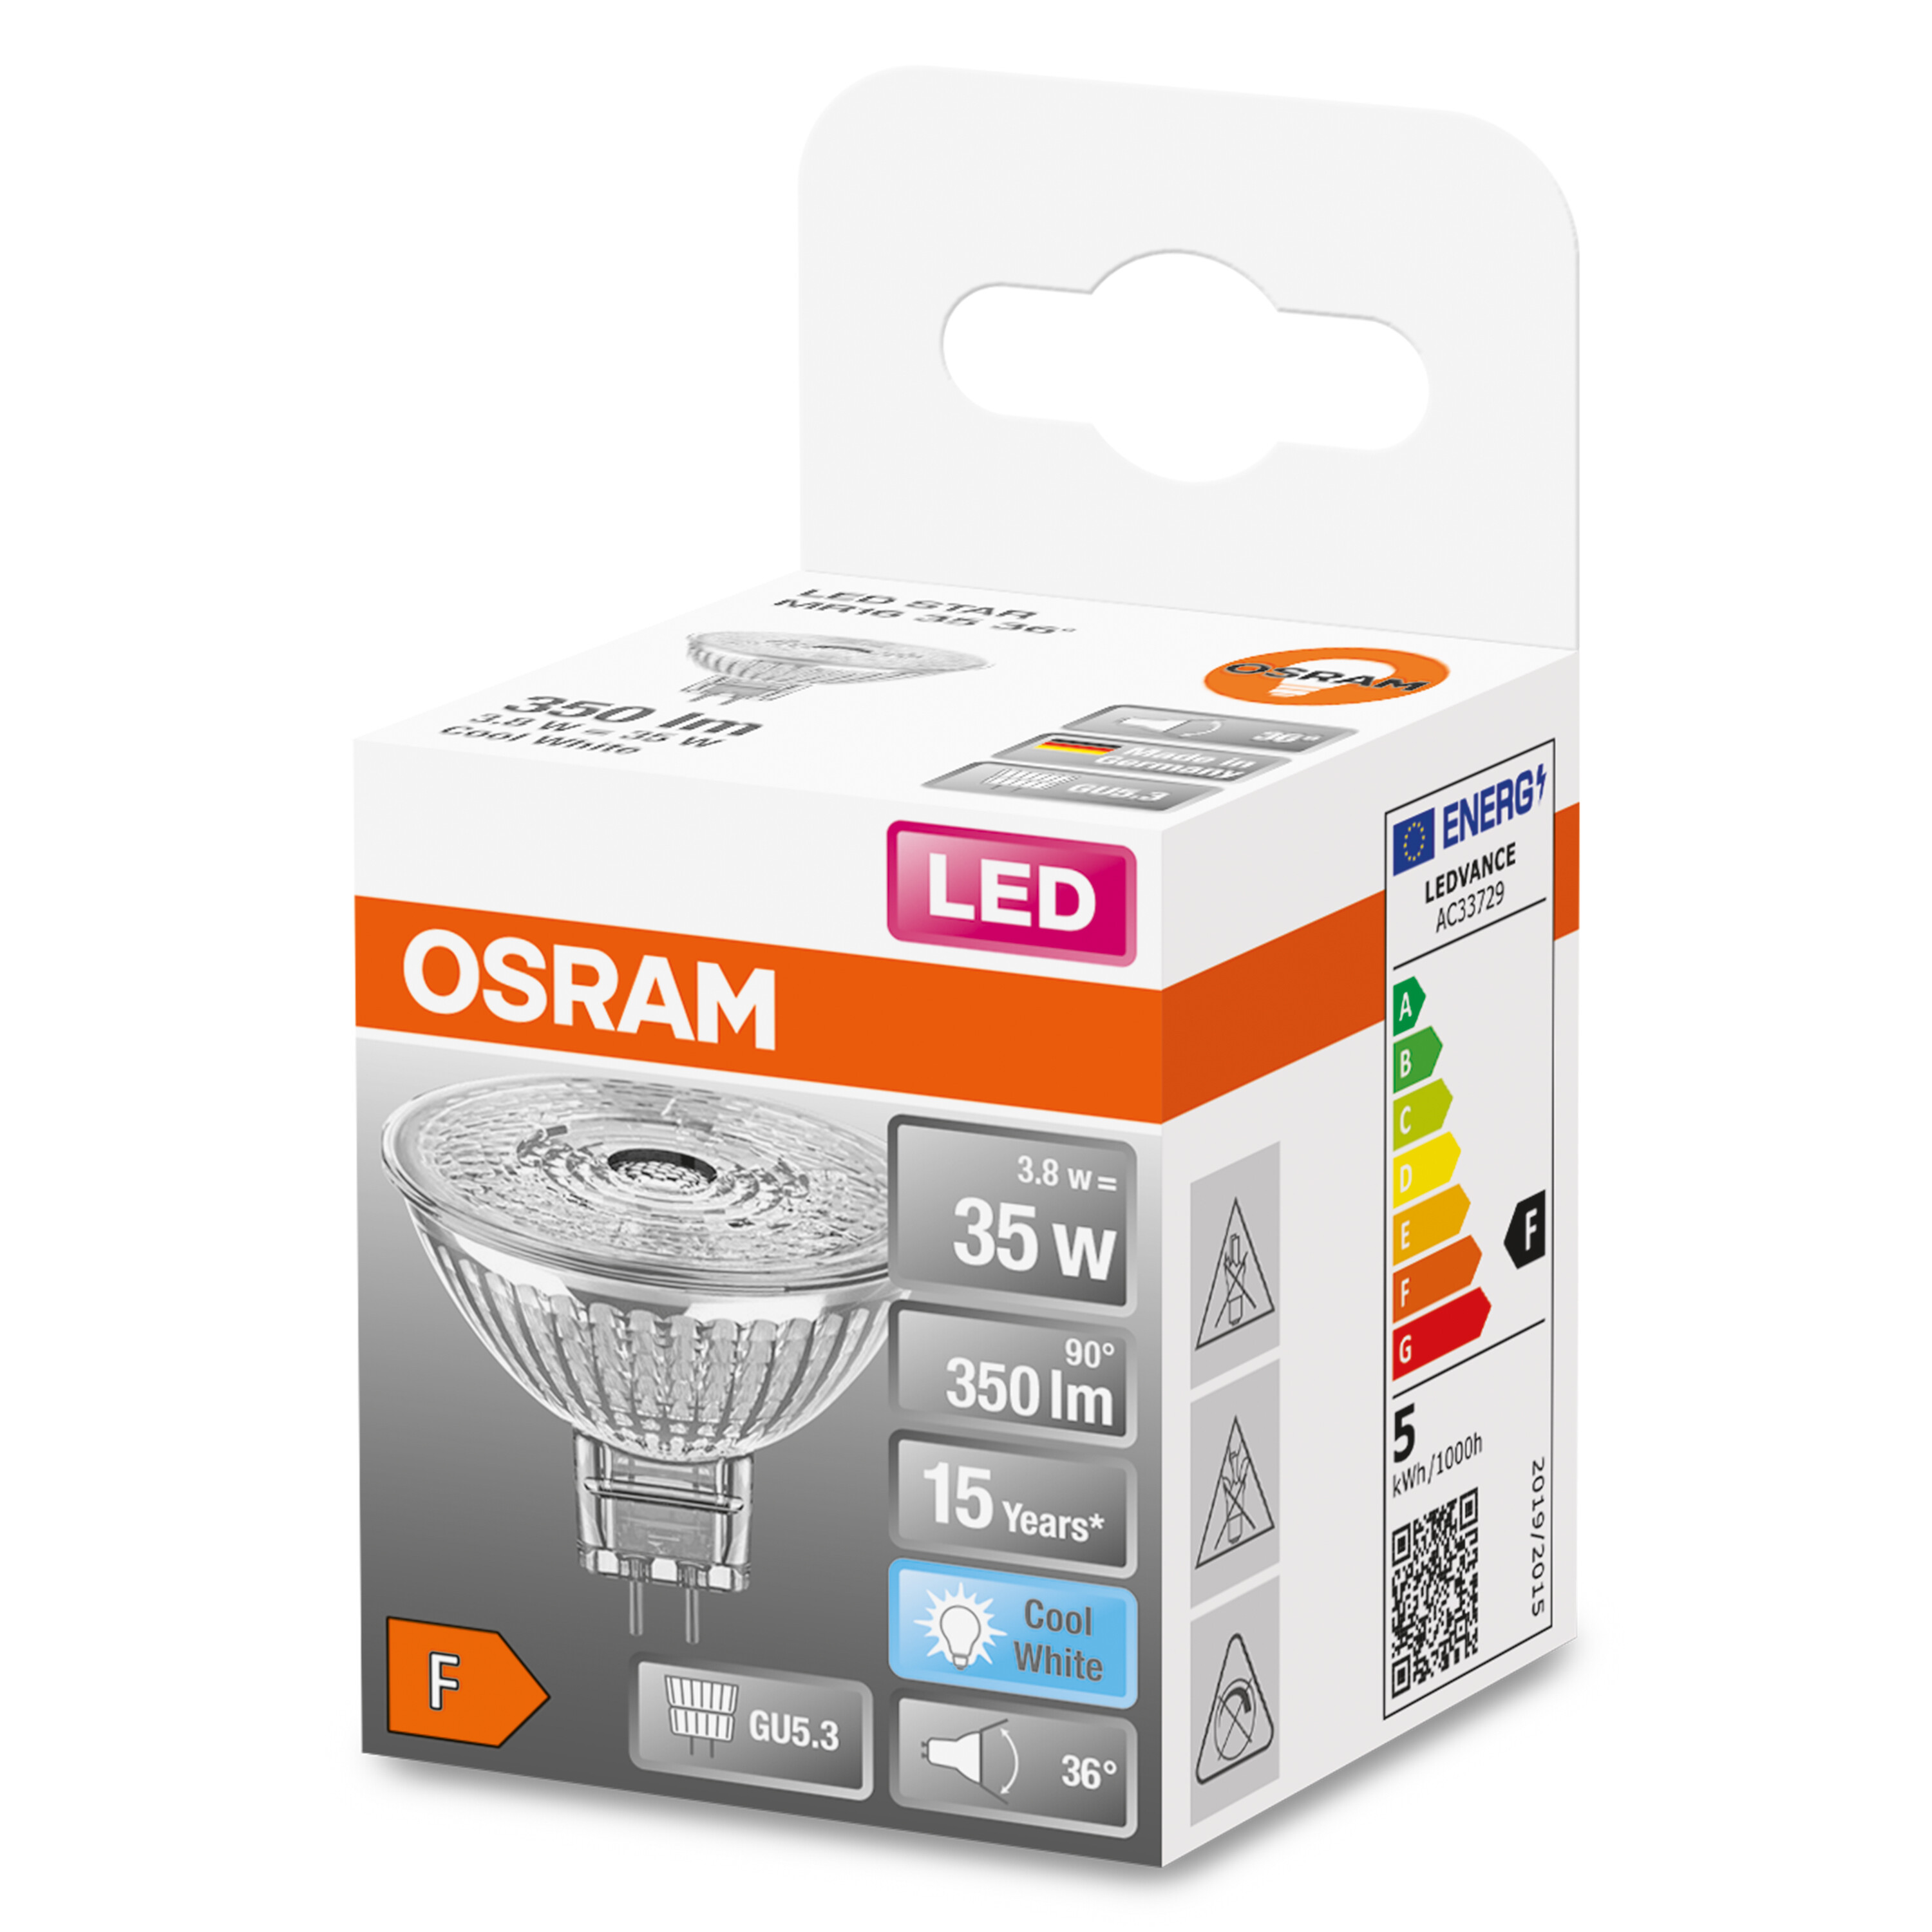 STAR LED MR16 OSRAM  Kaltweiß LED-Refektorlampe